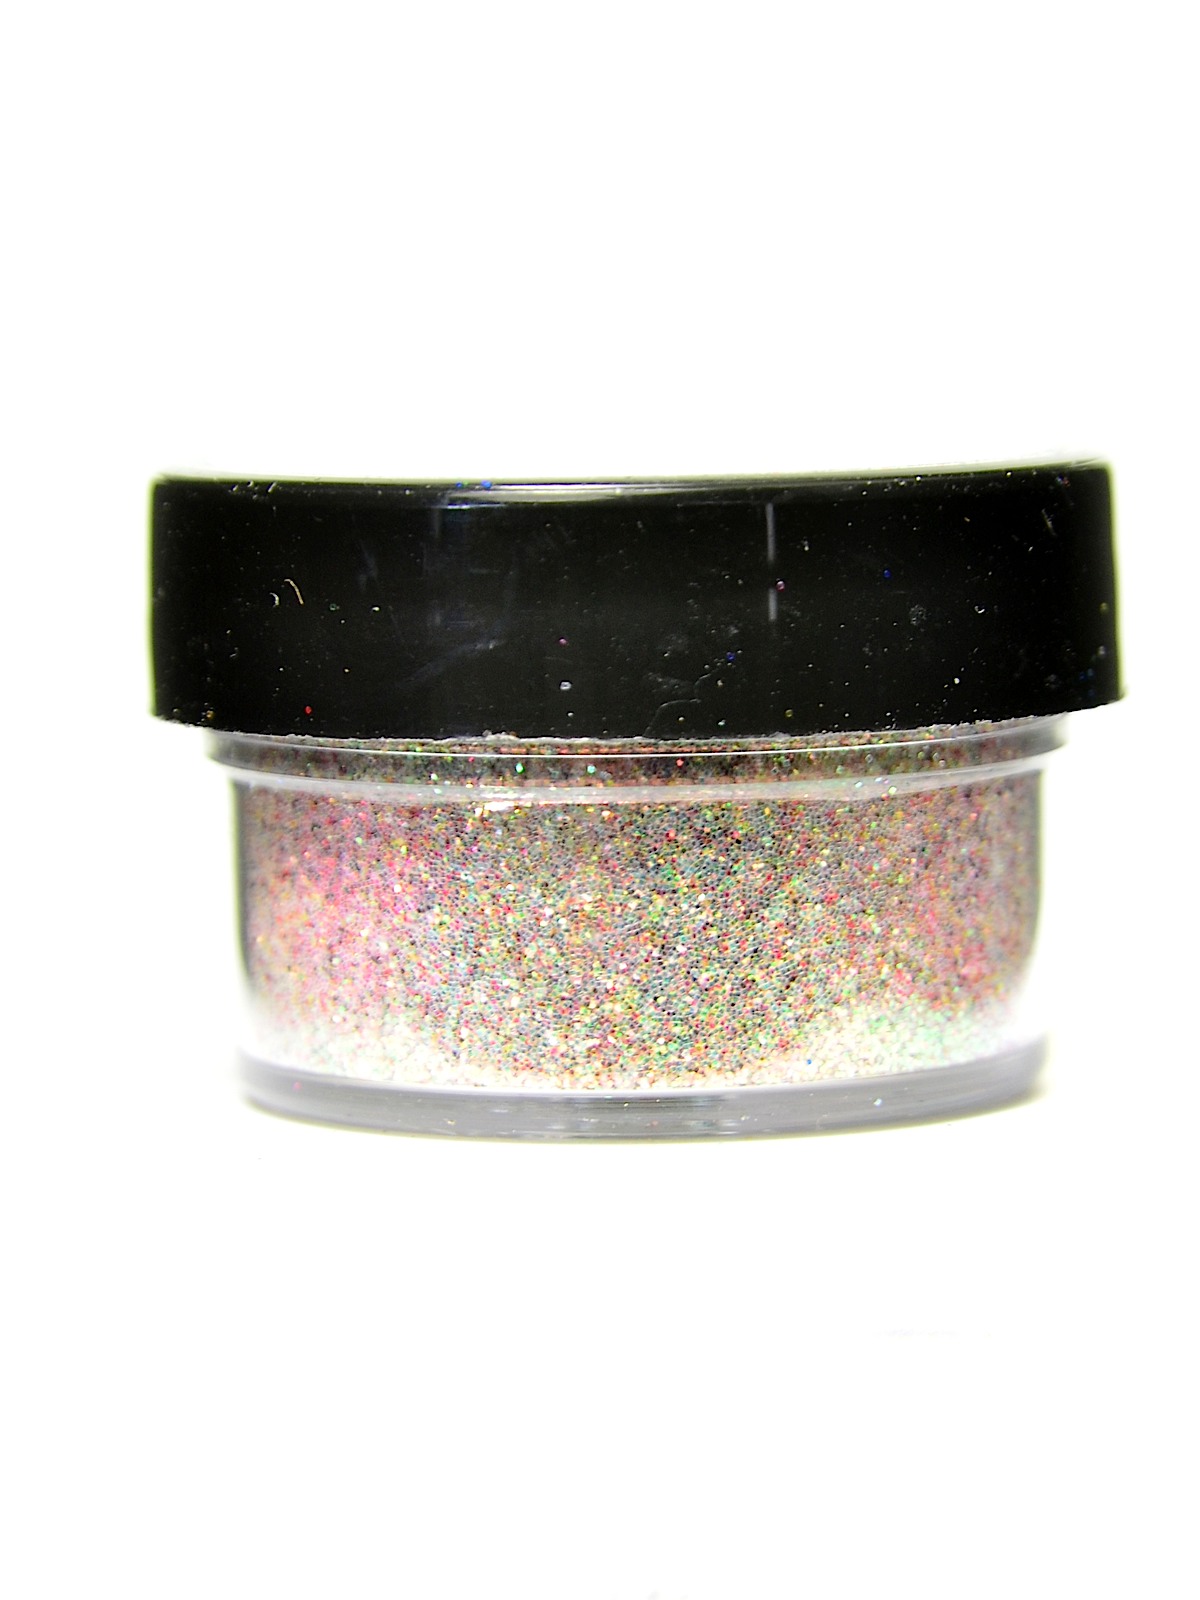 Ultrafine Transparent Glitter Fauna 1 2 Oz. Jar